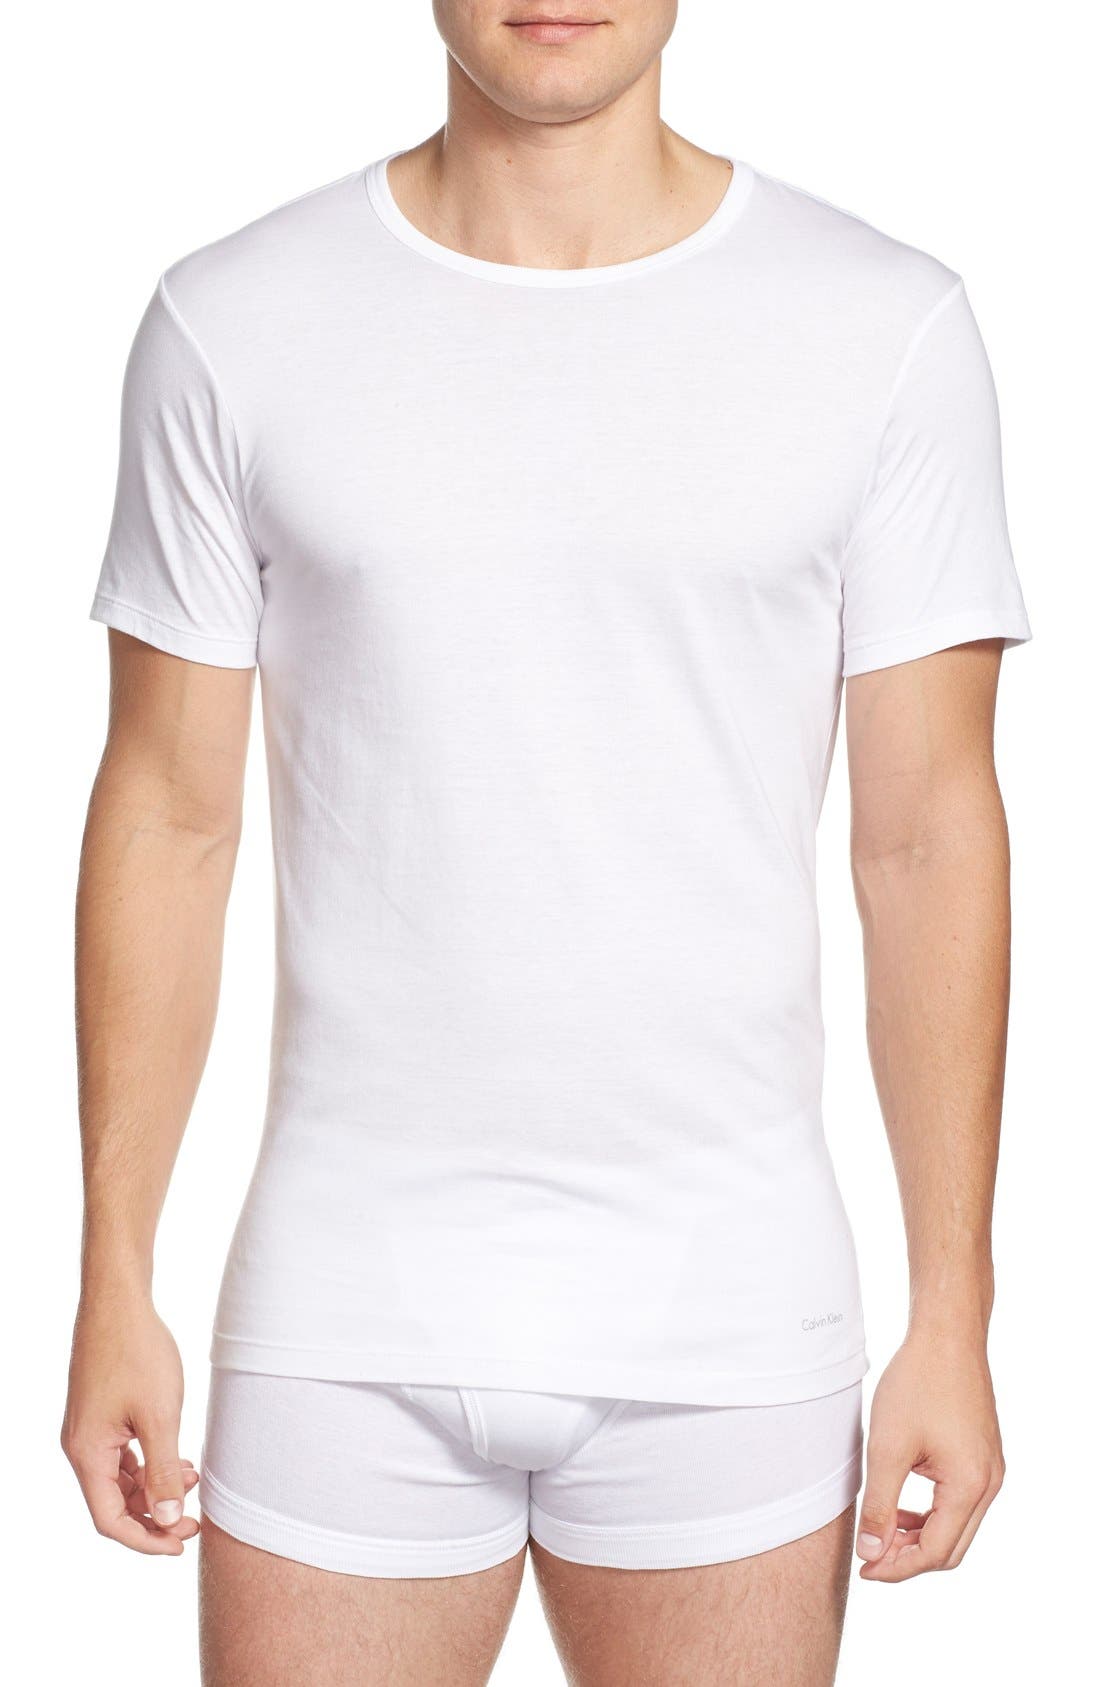 calvin klein slim fit white t shirt